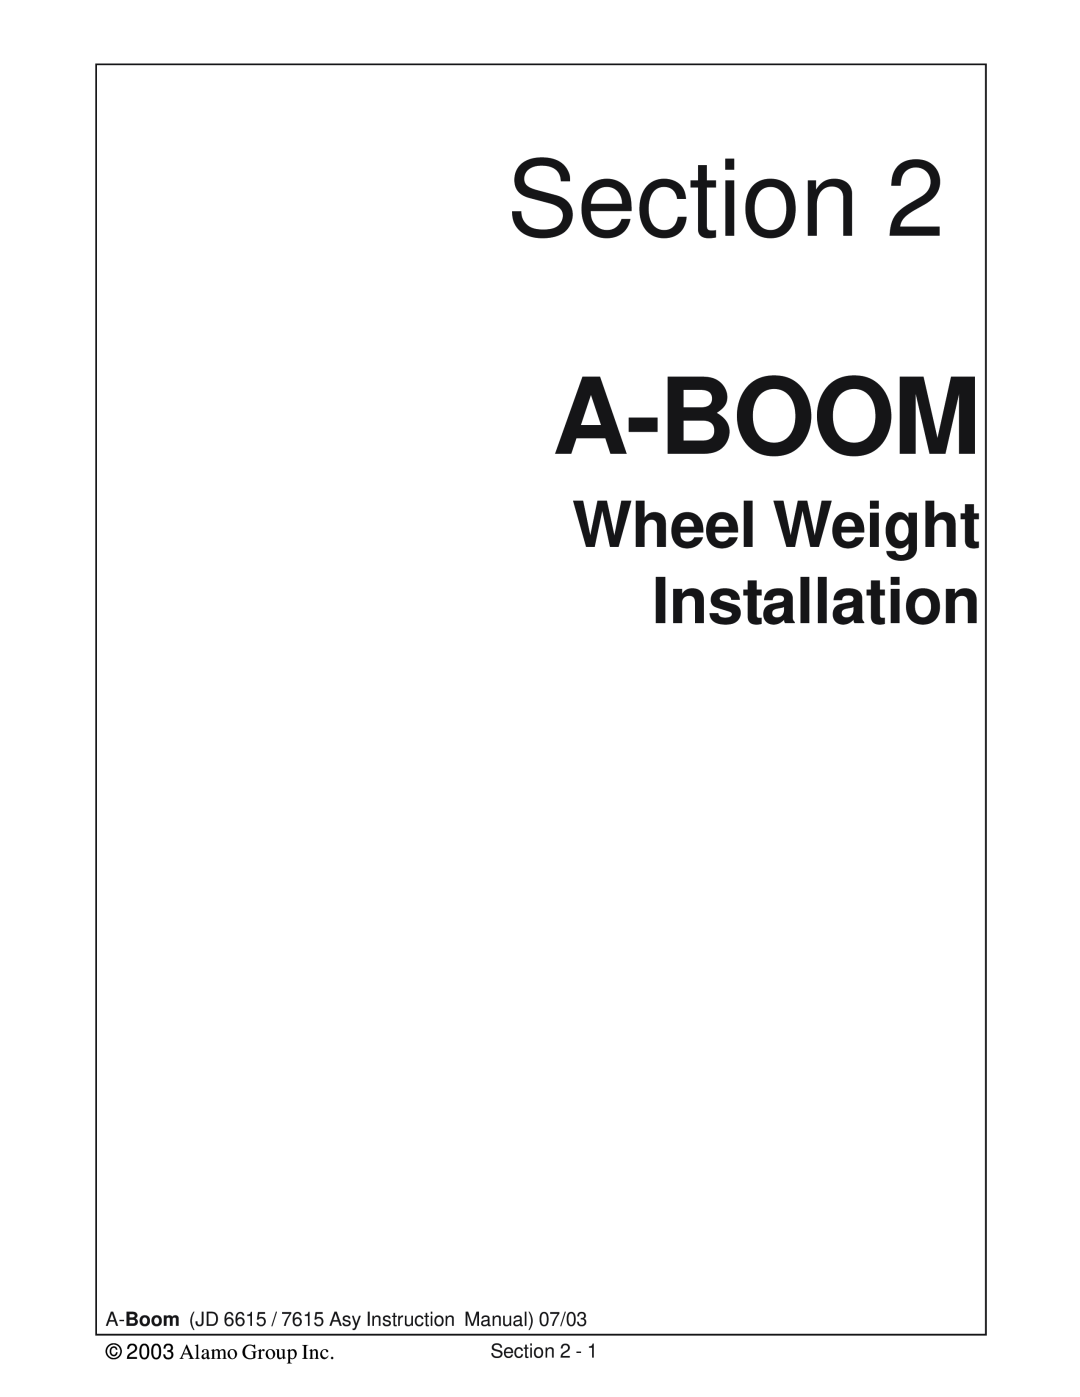 Alamo DSEB-D16/SAS instruction manual Wheel Weight Installation, Section, A-Boom, Alamo Group Inc 